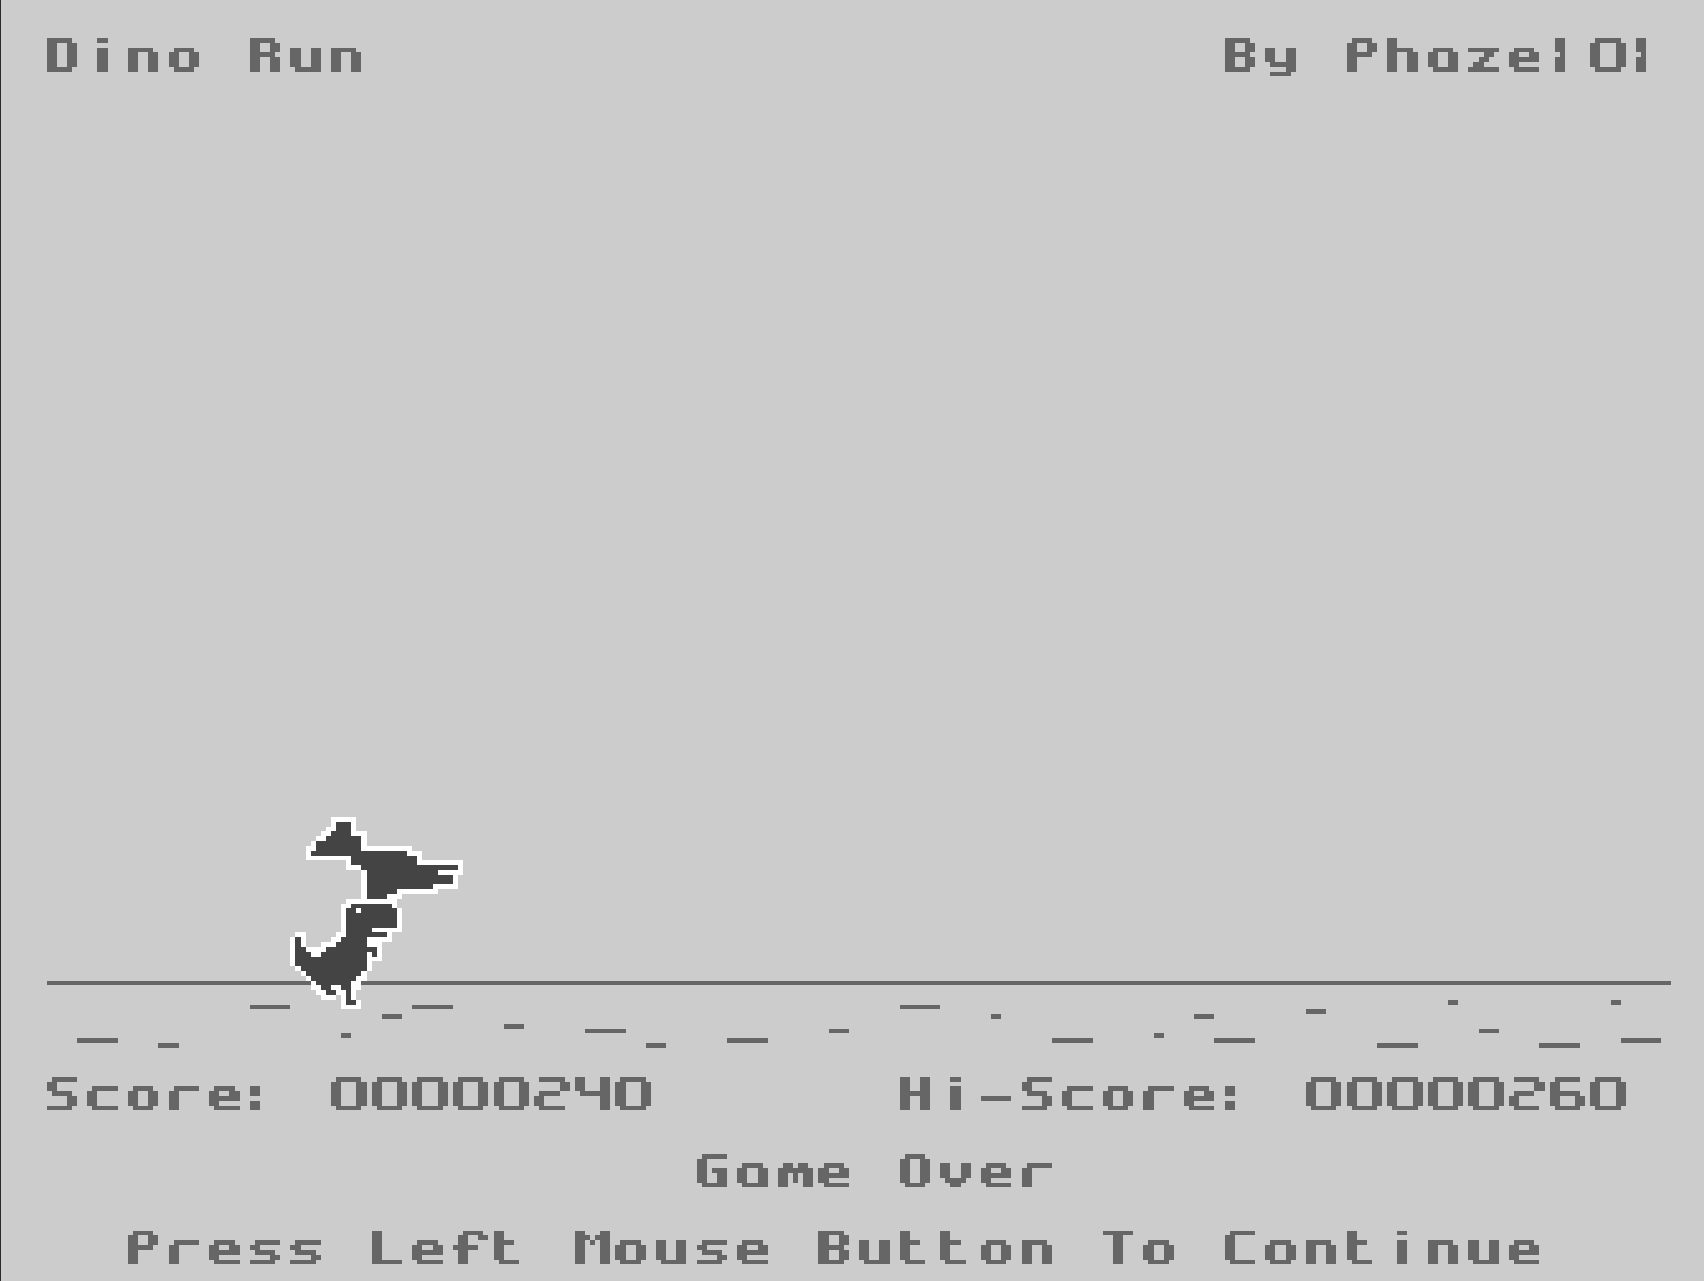 Dino Run (Amiga) by Prince / Phaze101 by Phaze101